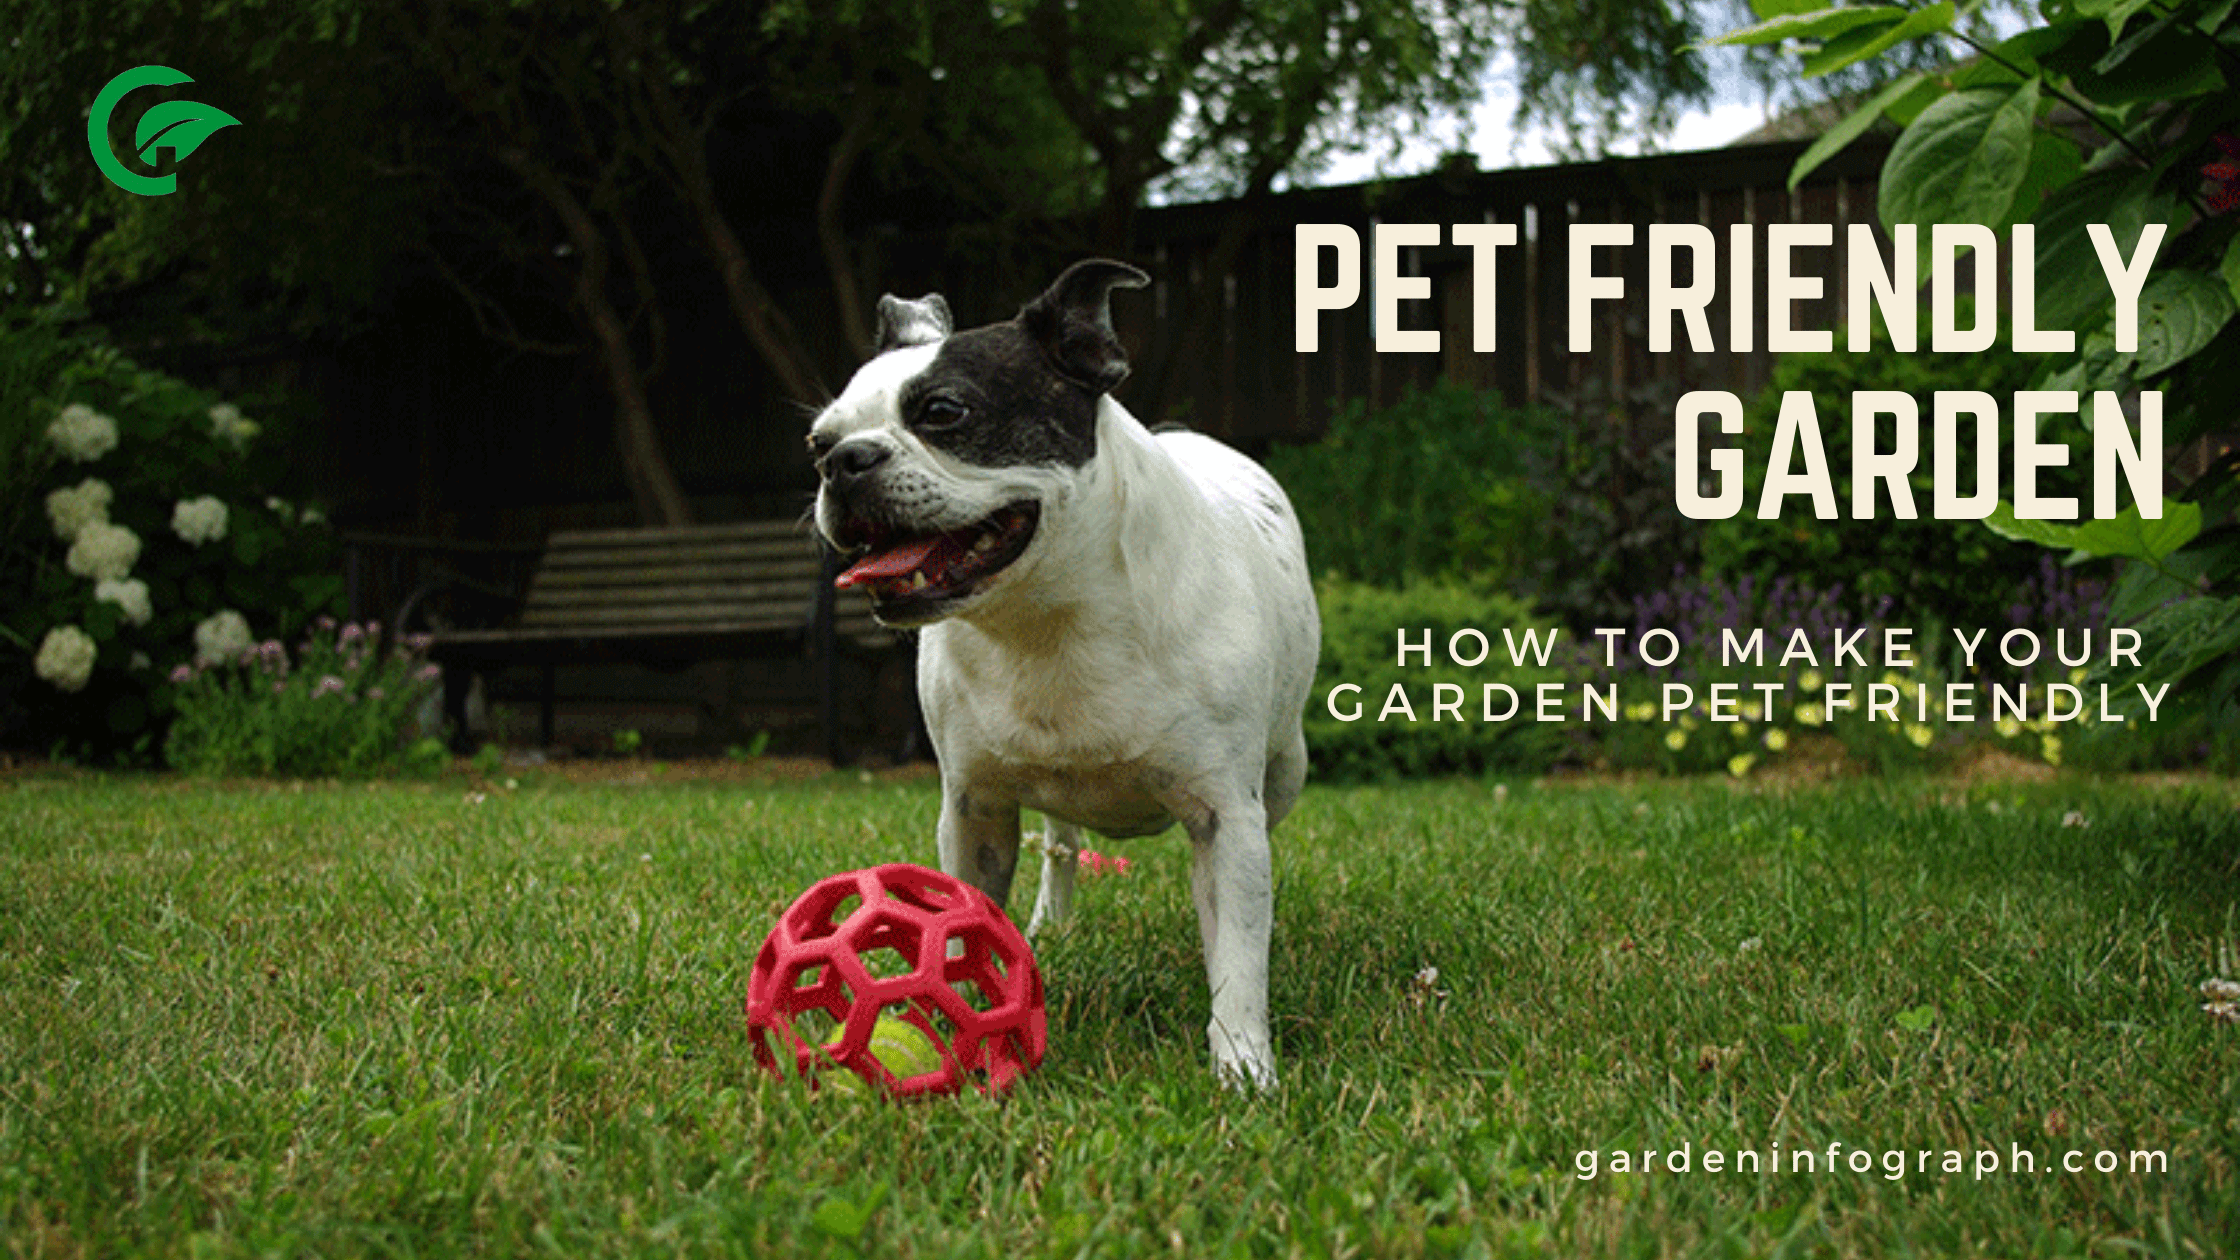 How to make a pet friendly garden